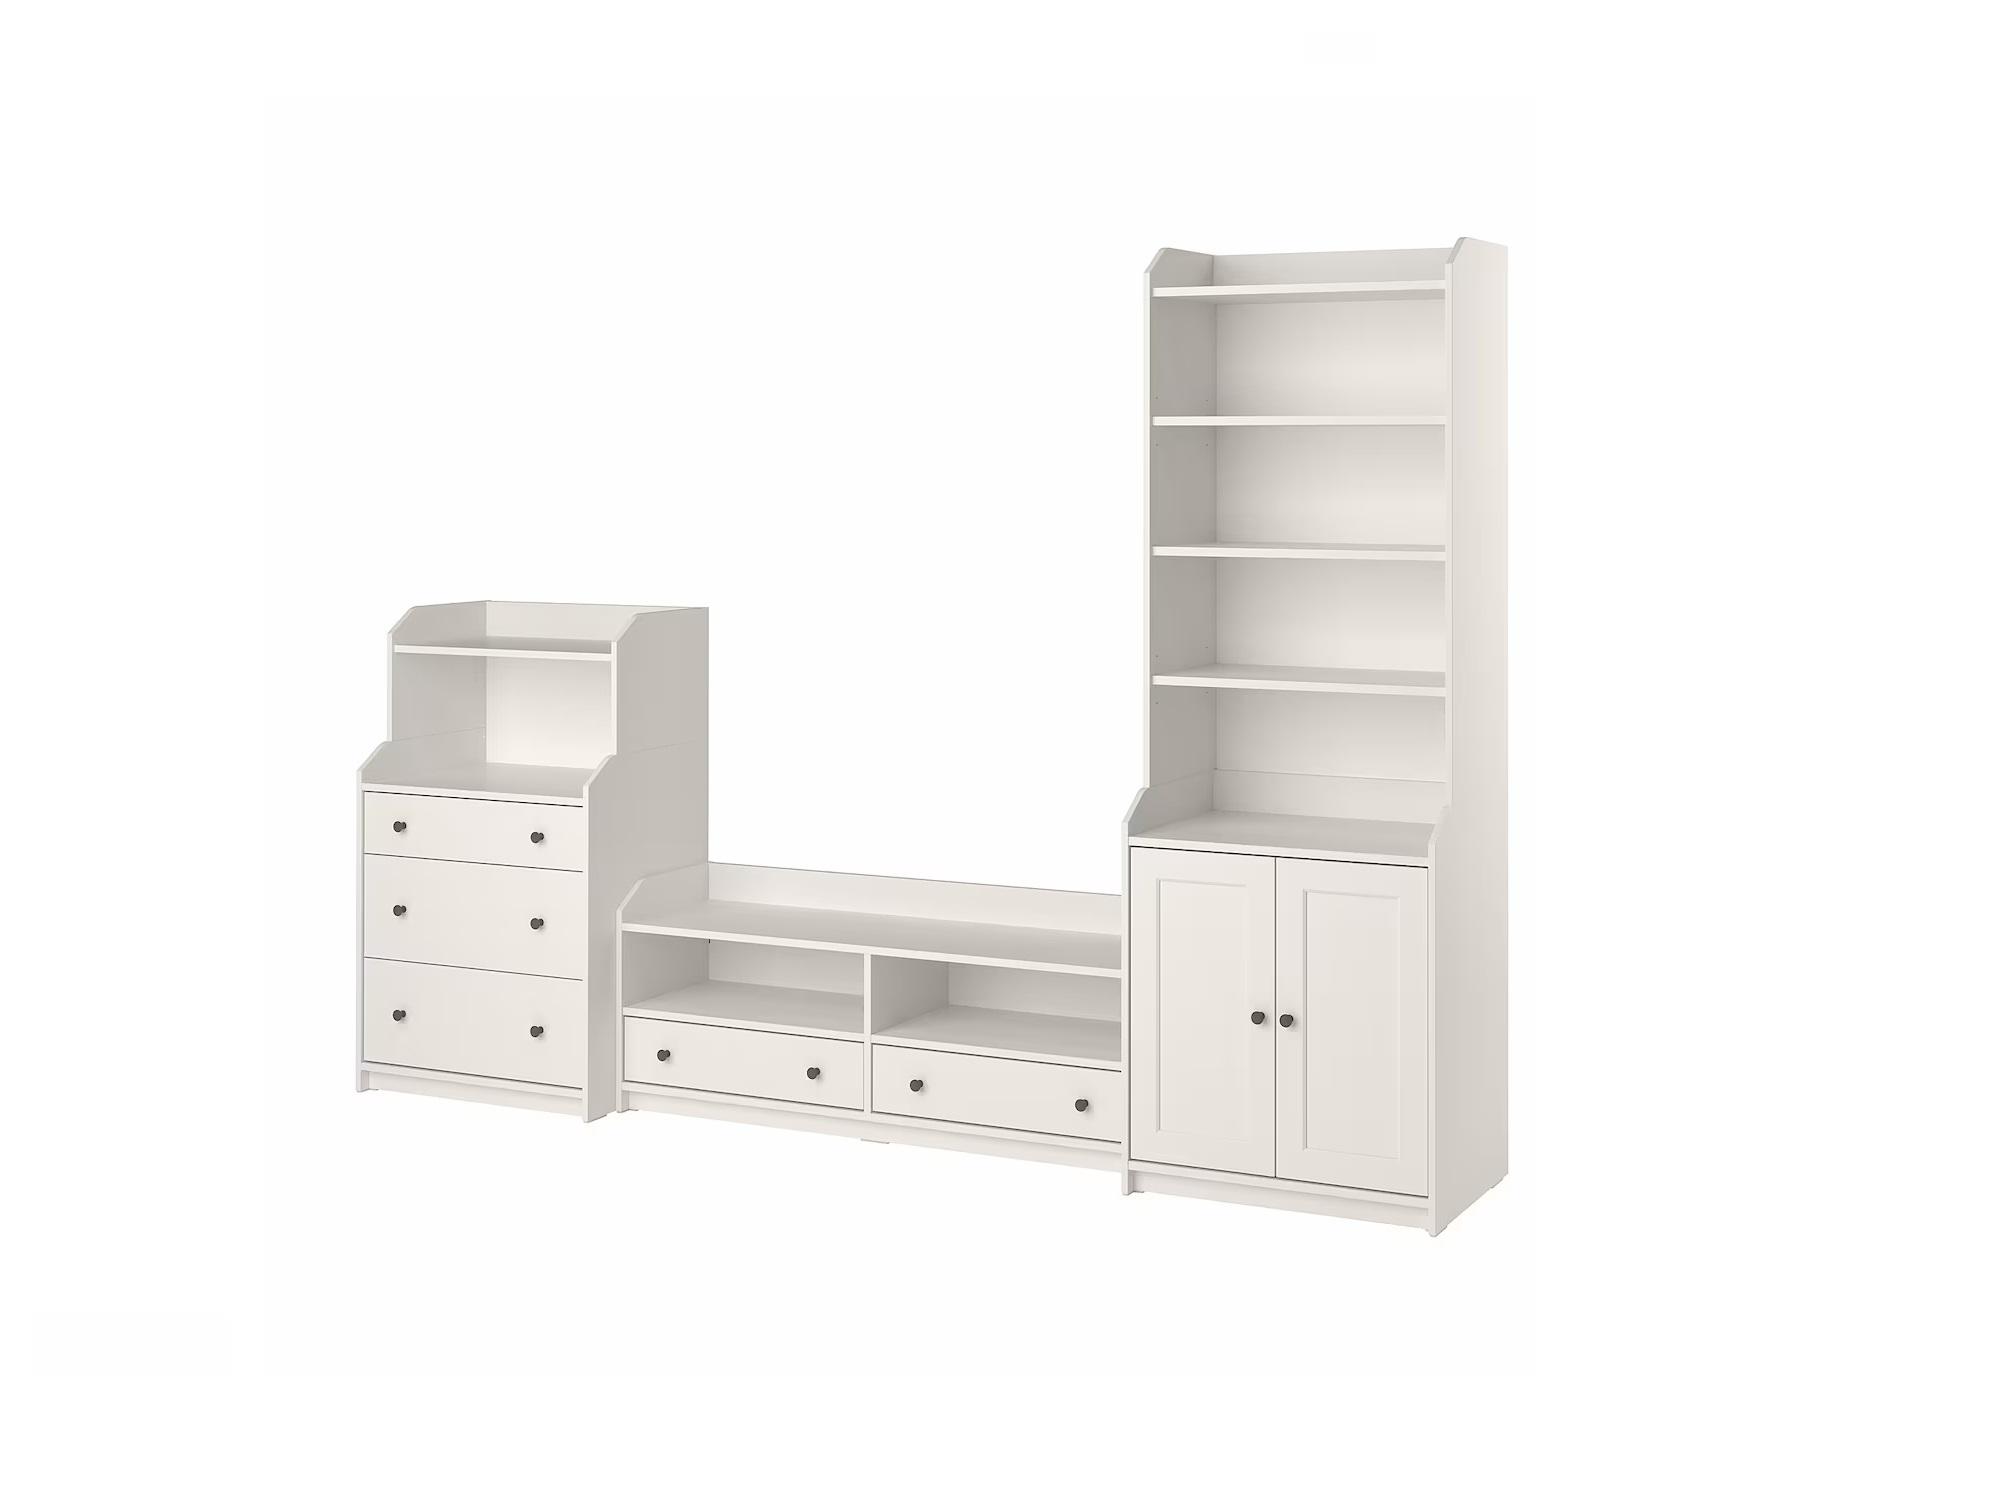 Изображение товара Стенка Хауга 521 white ИКЕА (IKEA), 277x46x202 см на сайте adeta.ru